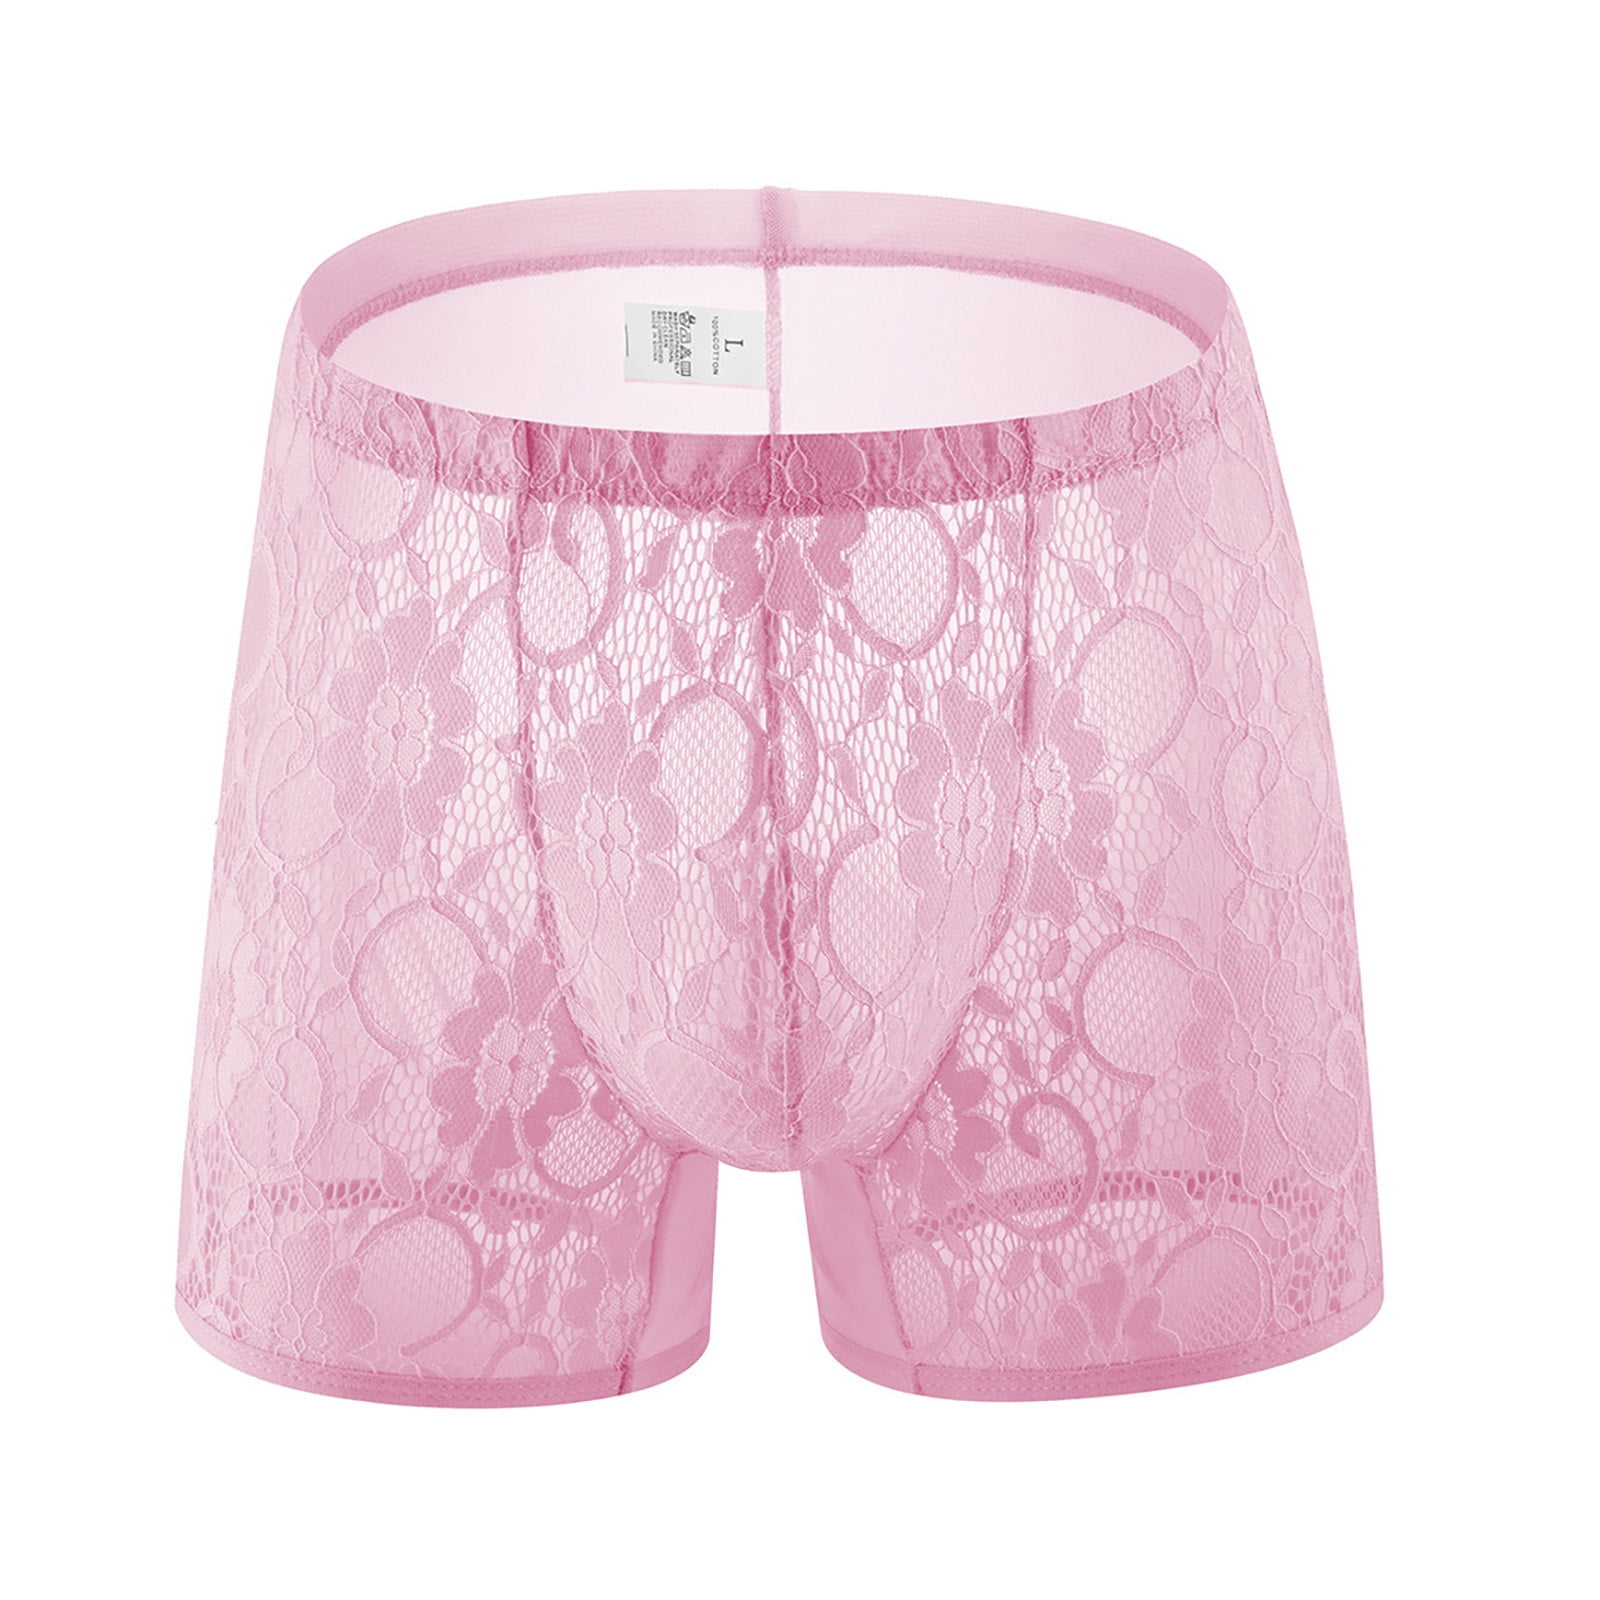 Men's Underwear Boxers Classic Underwear Solid Pink L 1-Pack